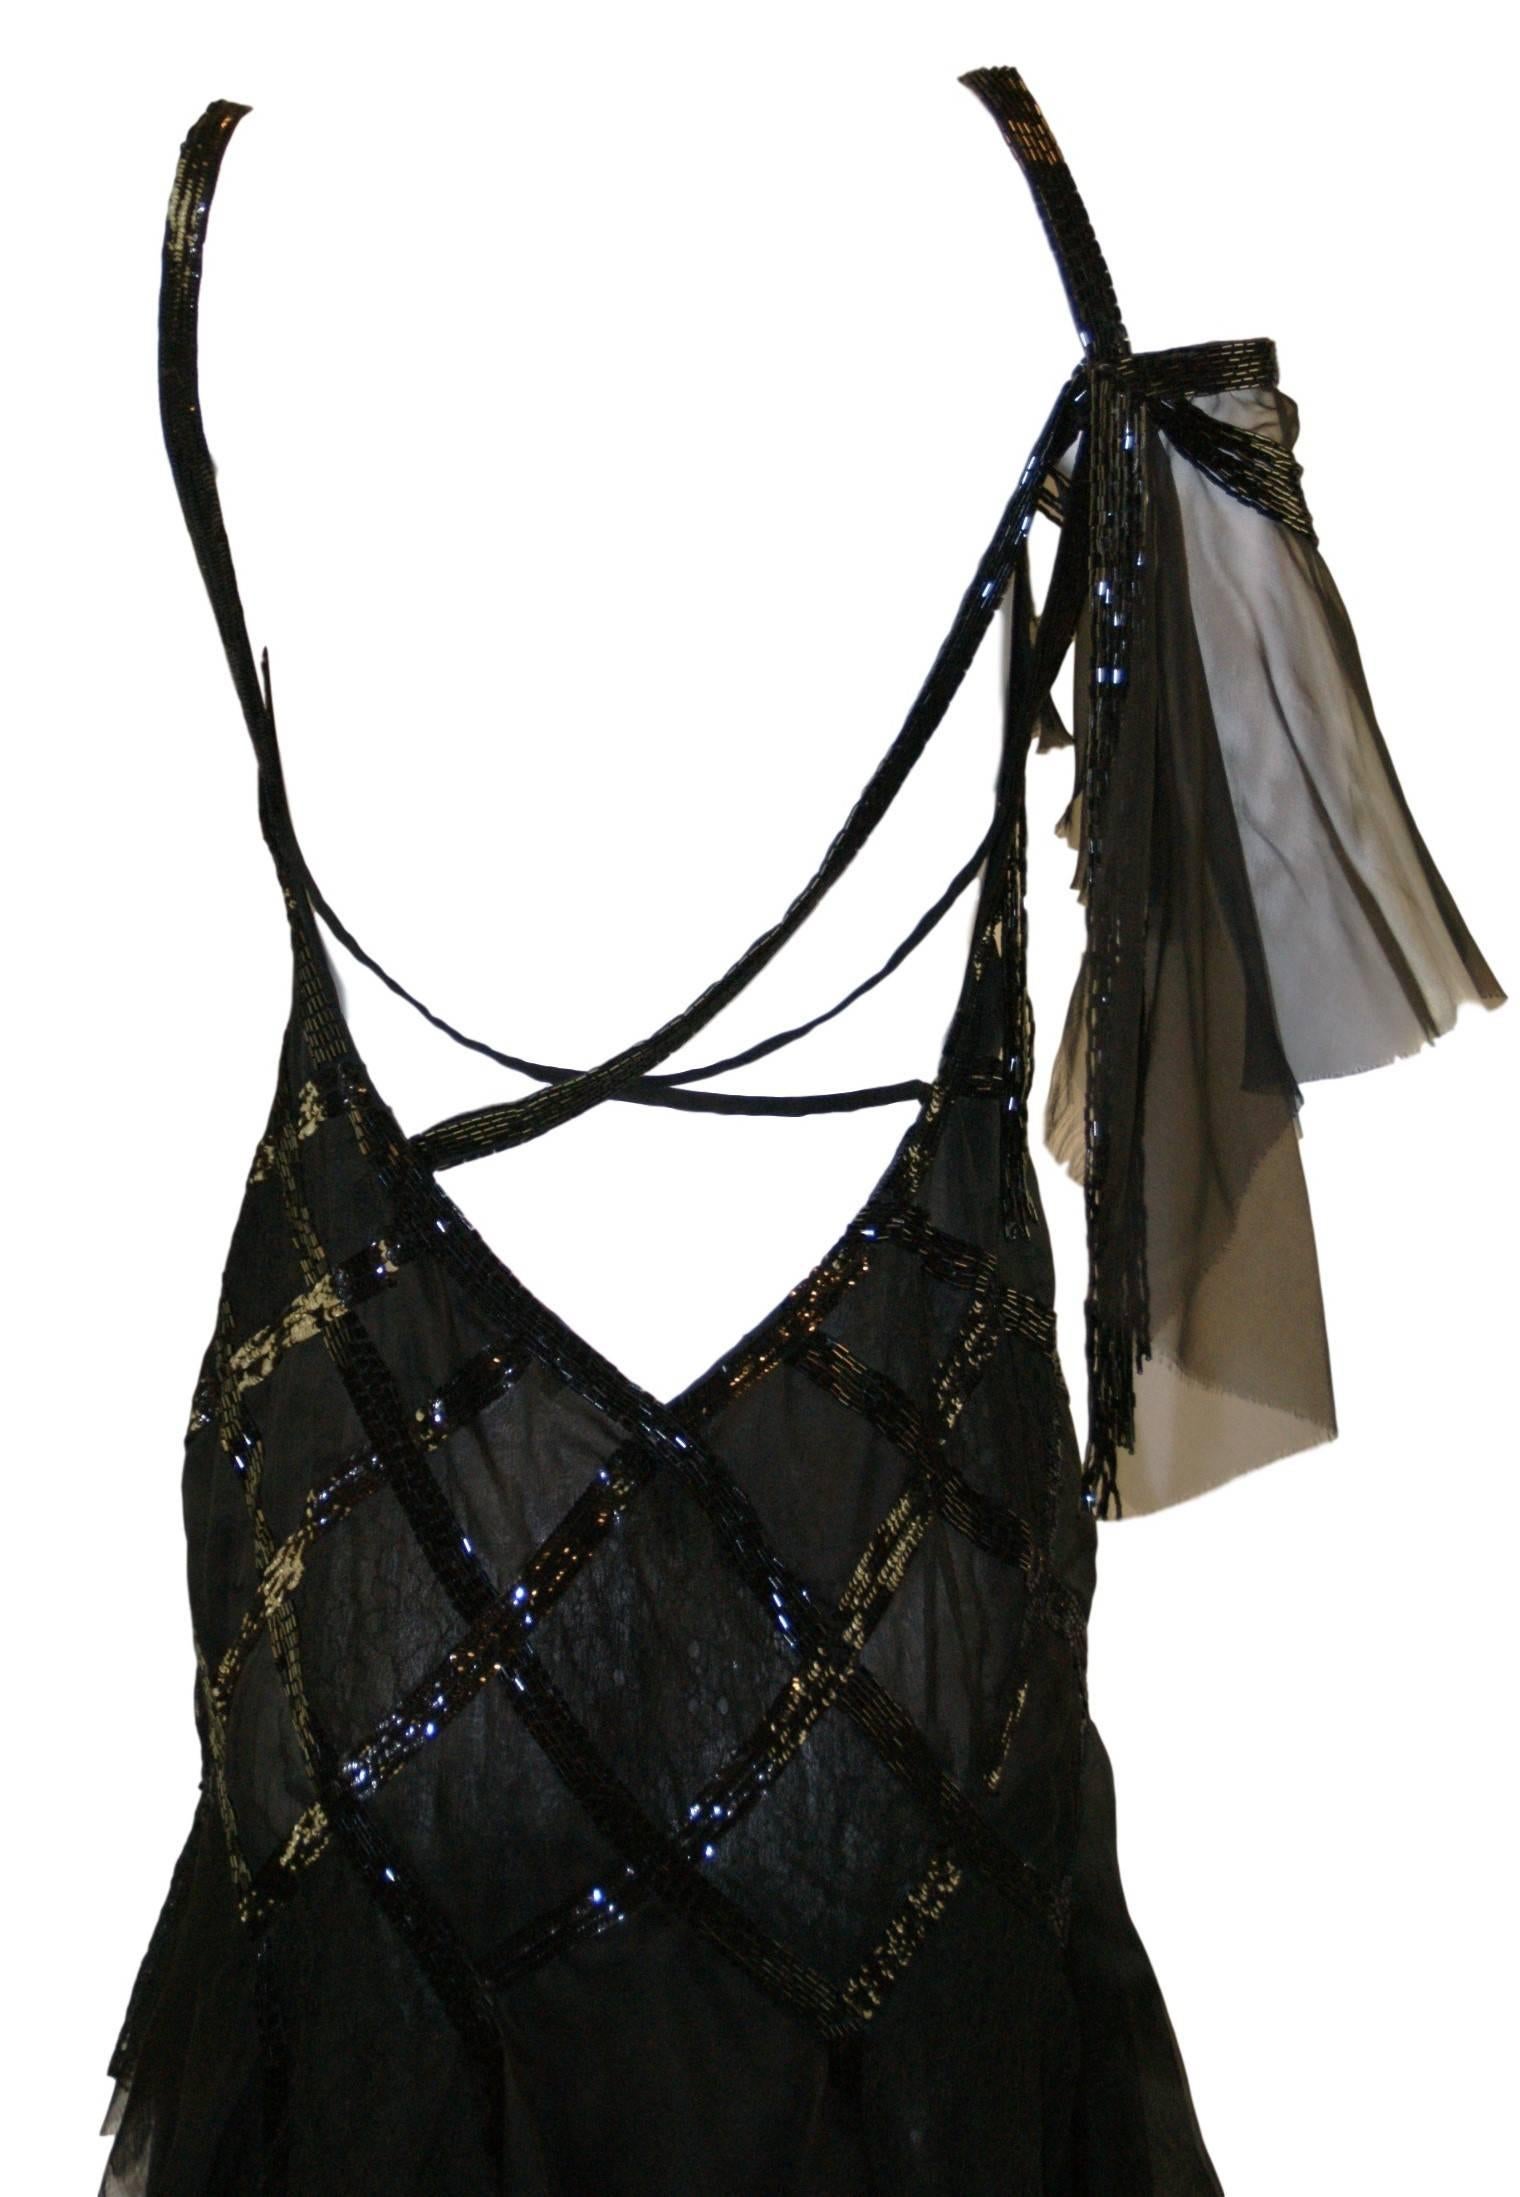 S/S 2003 Gianni Versace Couture Runway Black Silk Beaded 1920's Flapper Dress 40 2